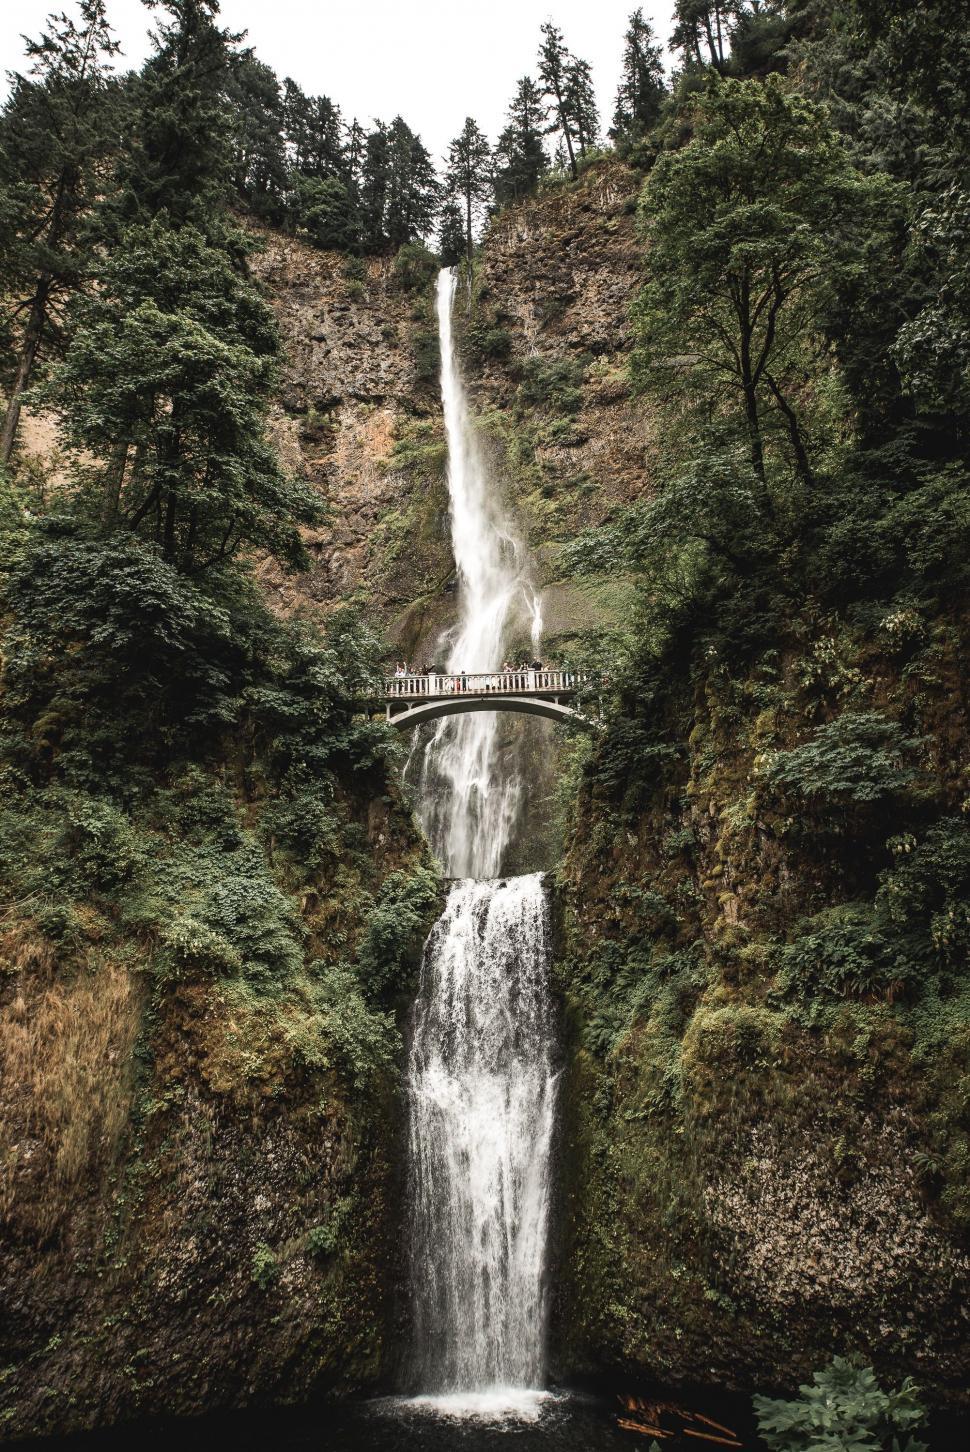 Free Image of Majestic Waterfall With Bridge 